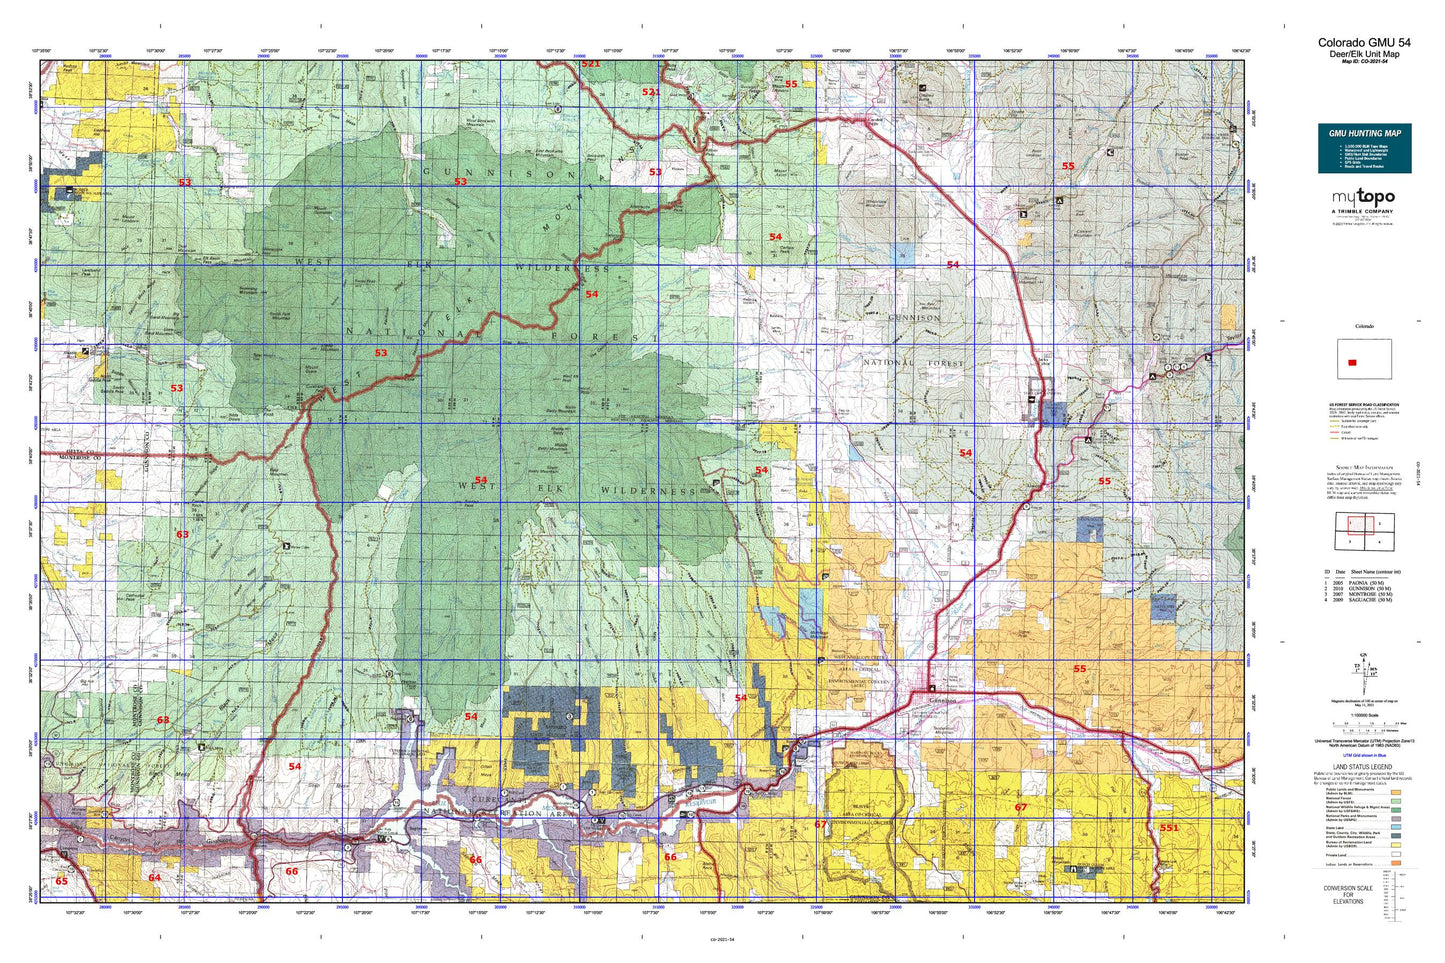 Colorado GMU 54 Map Image